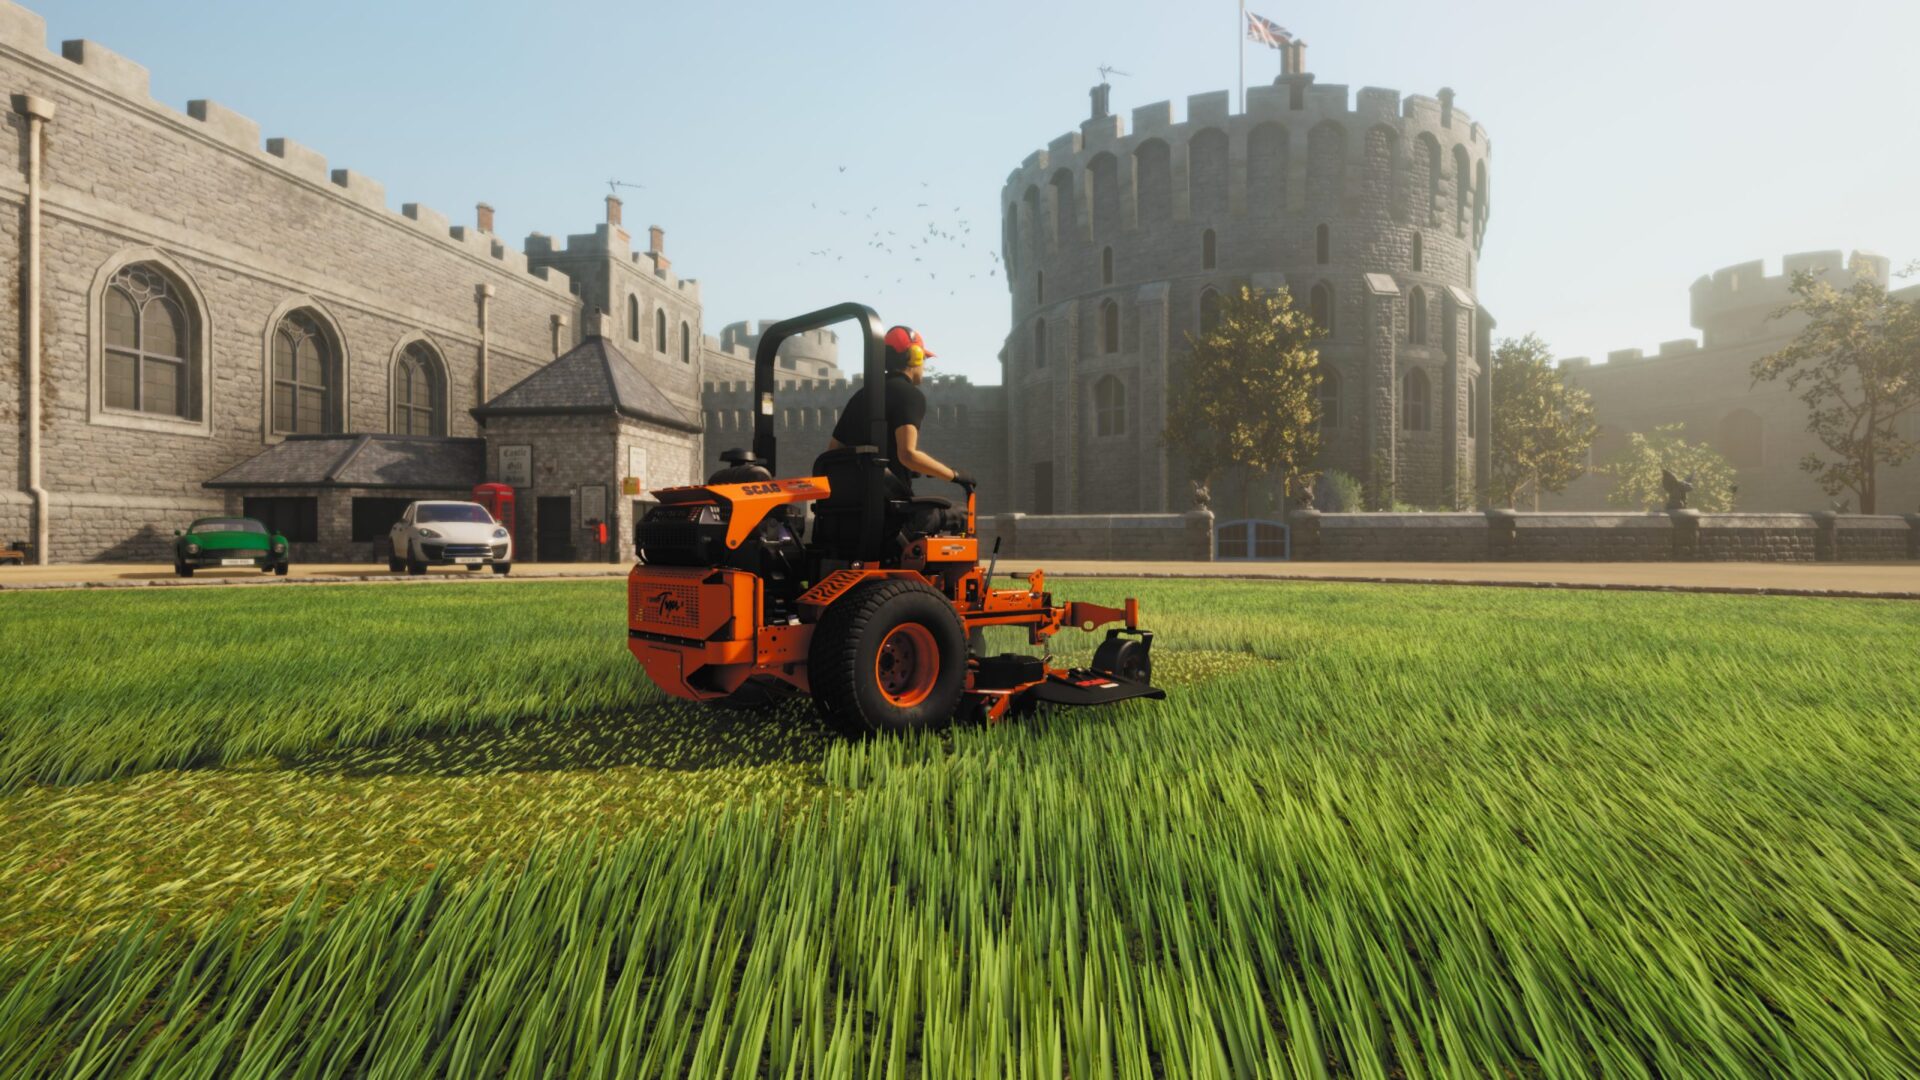 Lawn Mowing Simulator é simulador 'zen' de cortar grama